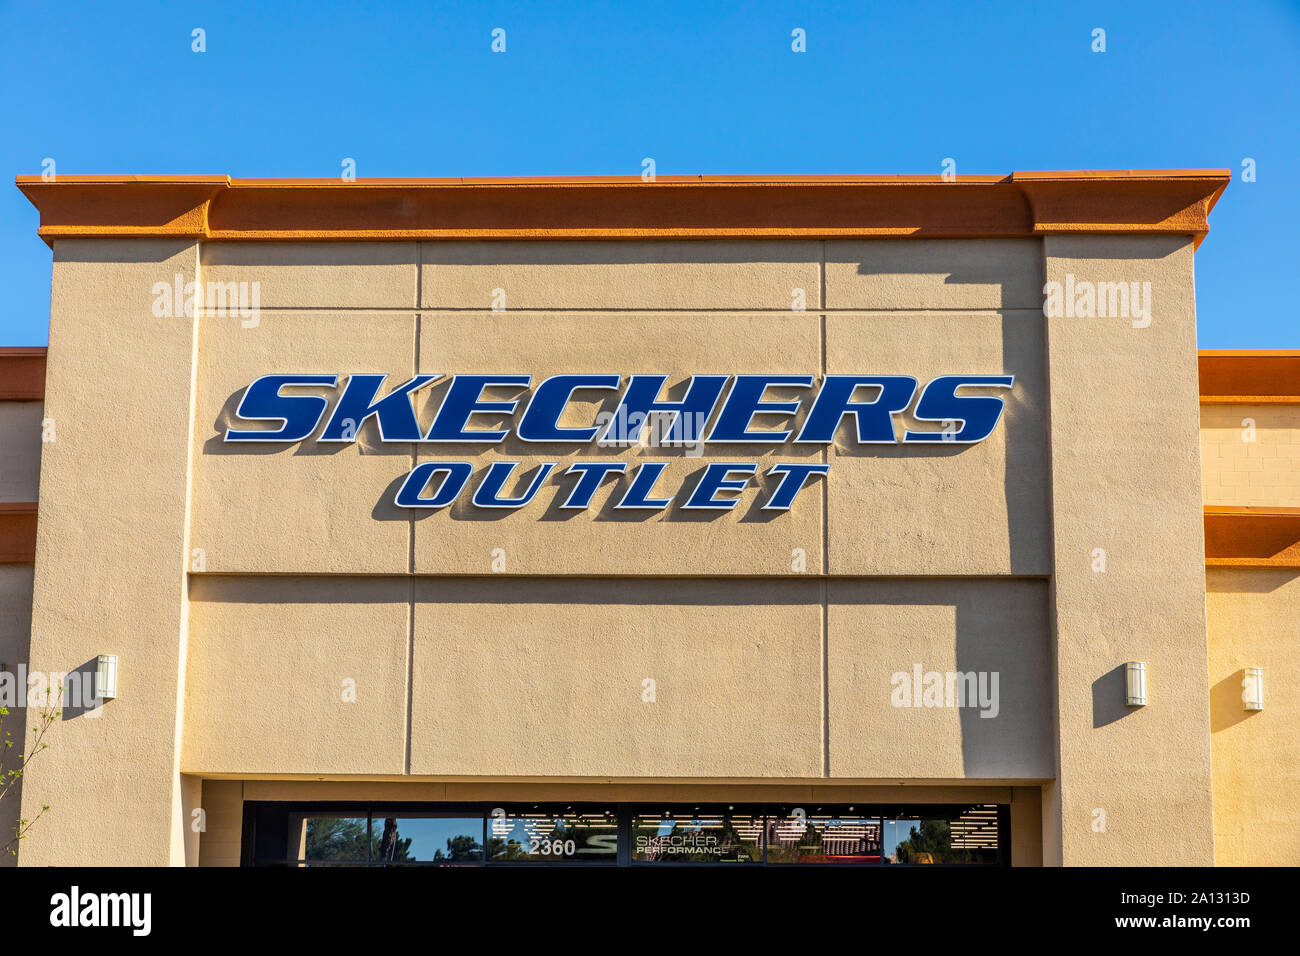 Outlet De Skechers En Buy Now, Clearance, 51% OFF, sportsregras.com